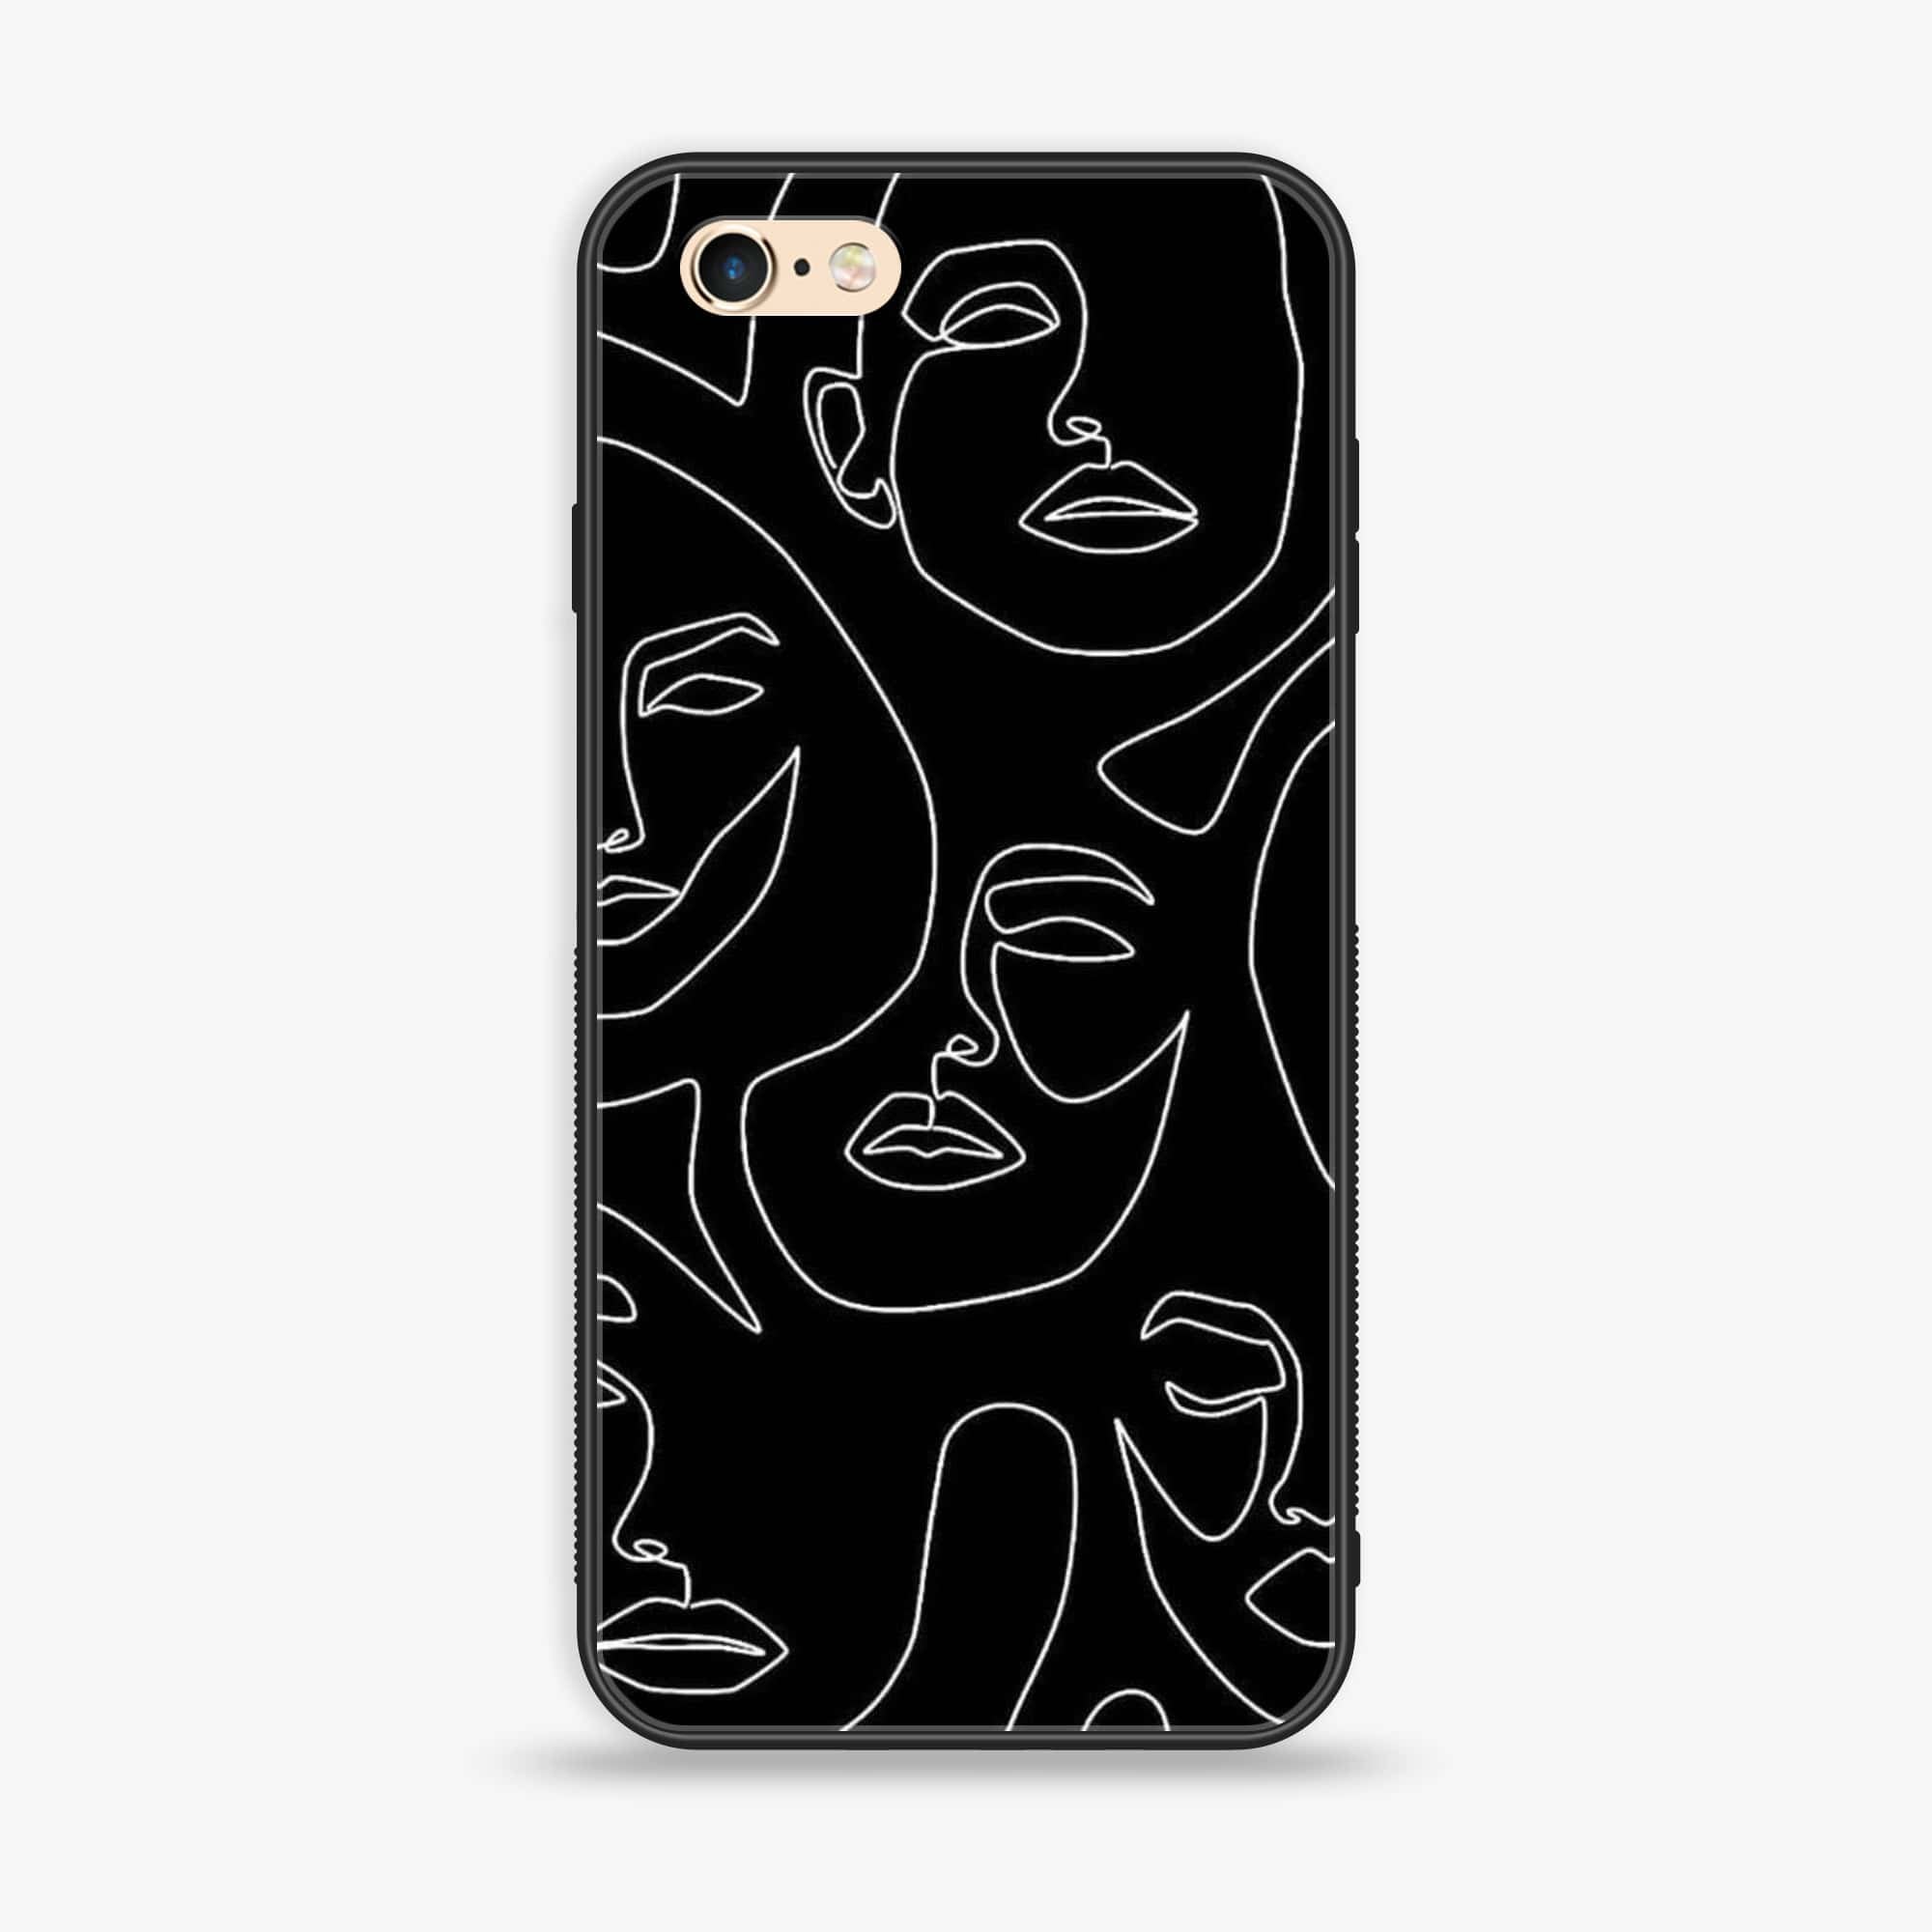 iPhone 6 - Girls Line Art Series - Premium Printed Glass soft Bumper shock Proof Case